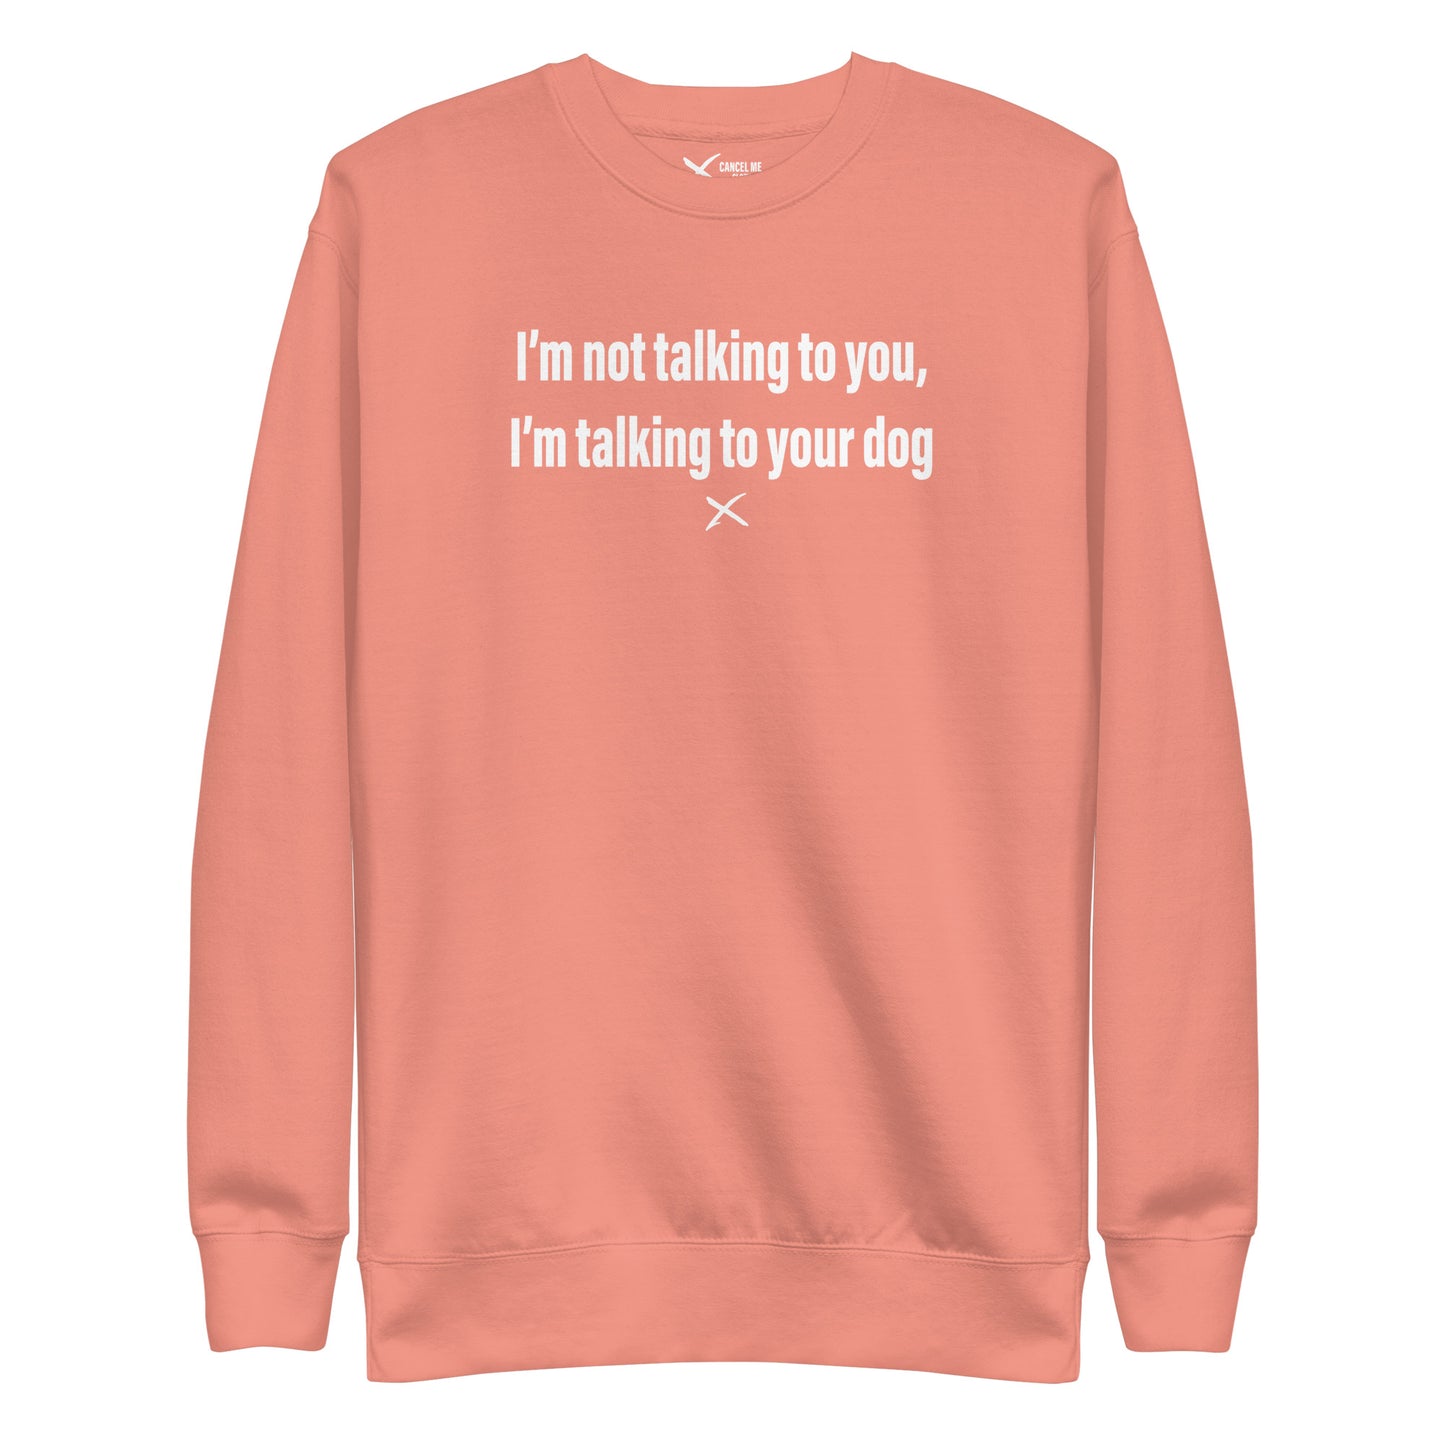 I'm not talking to you, I'm talking to your dog - Sweatshirt